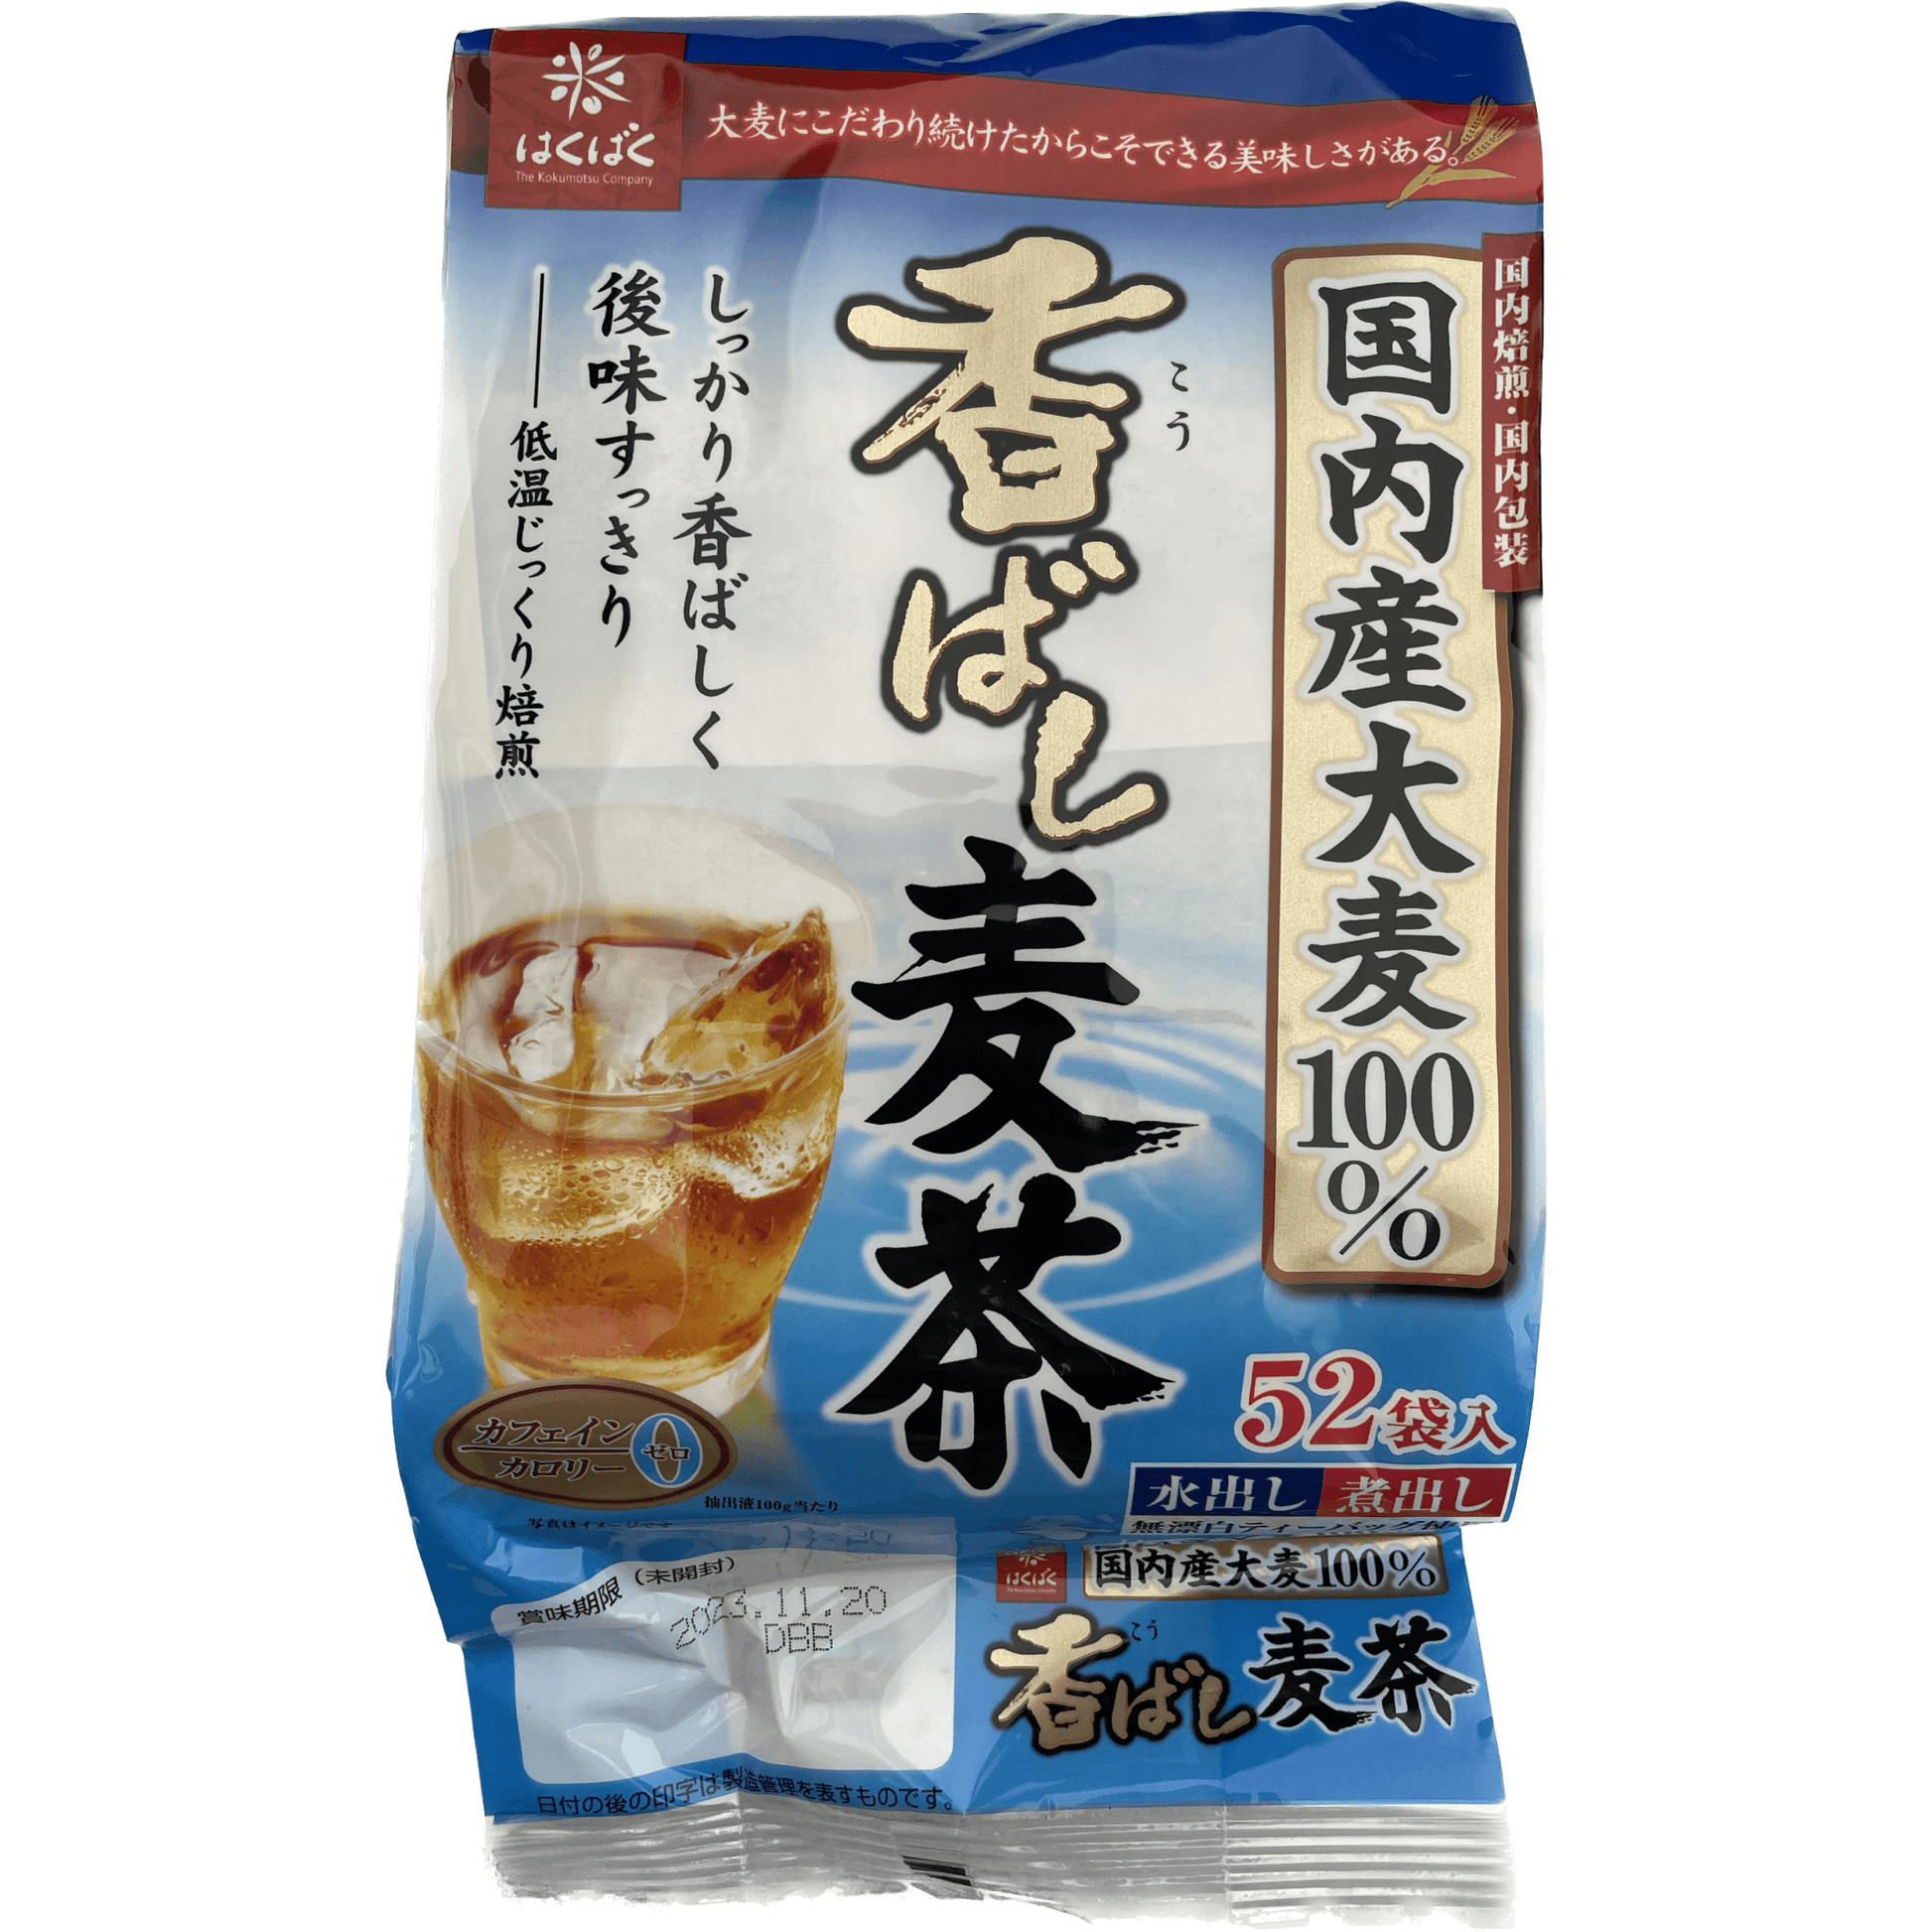 Hakubaku fragrant barley teaはくばく　香ばし麦茶 - RiceWineShop